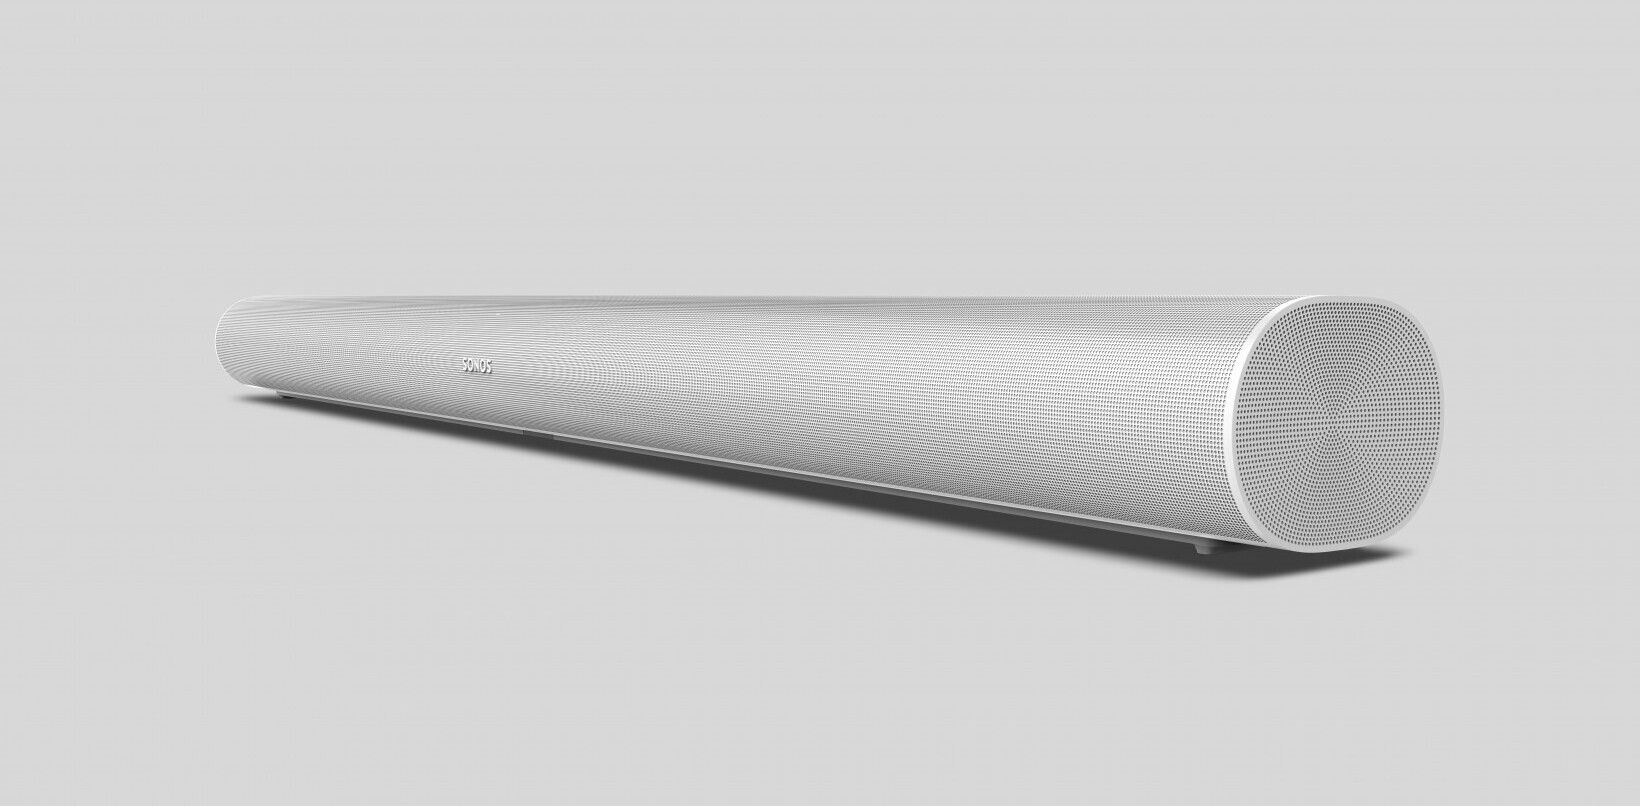 Sonos announces the Arc soundbar, its first Dolby Atmos speaker